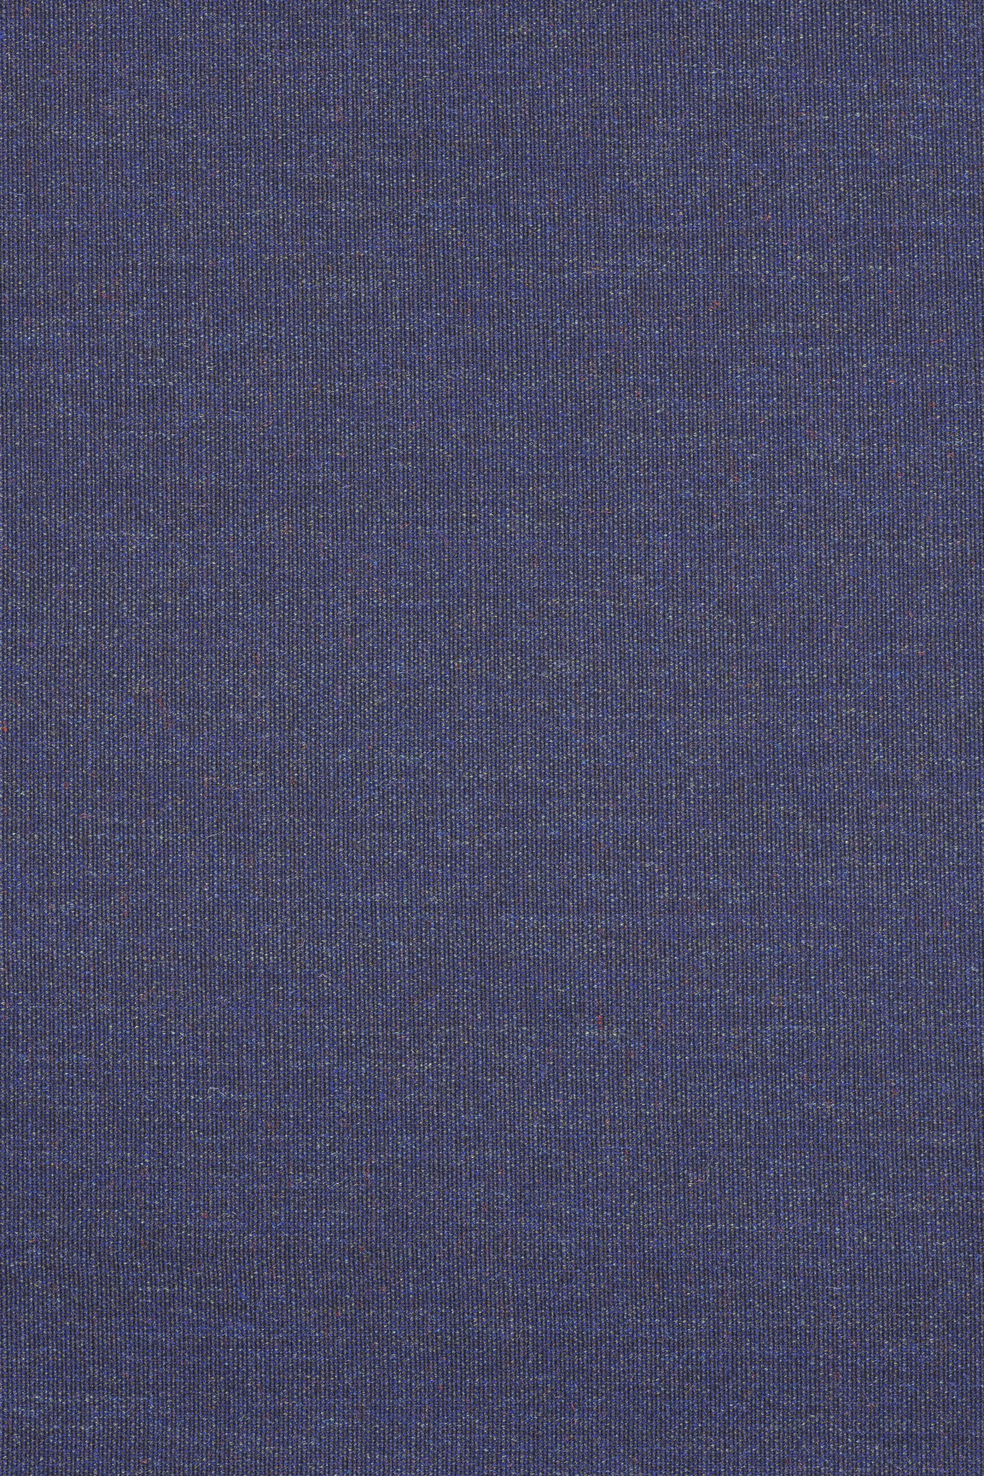 Fabric sample Canvas 2 786 purple